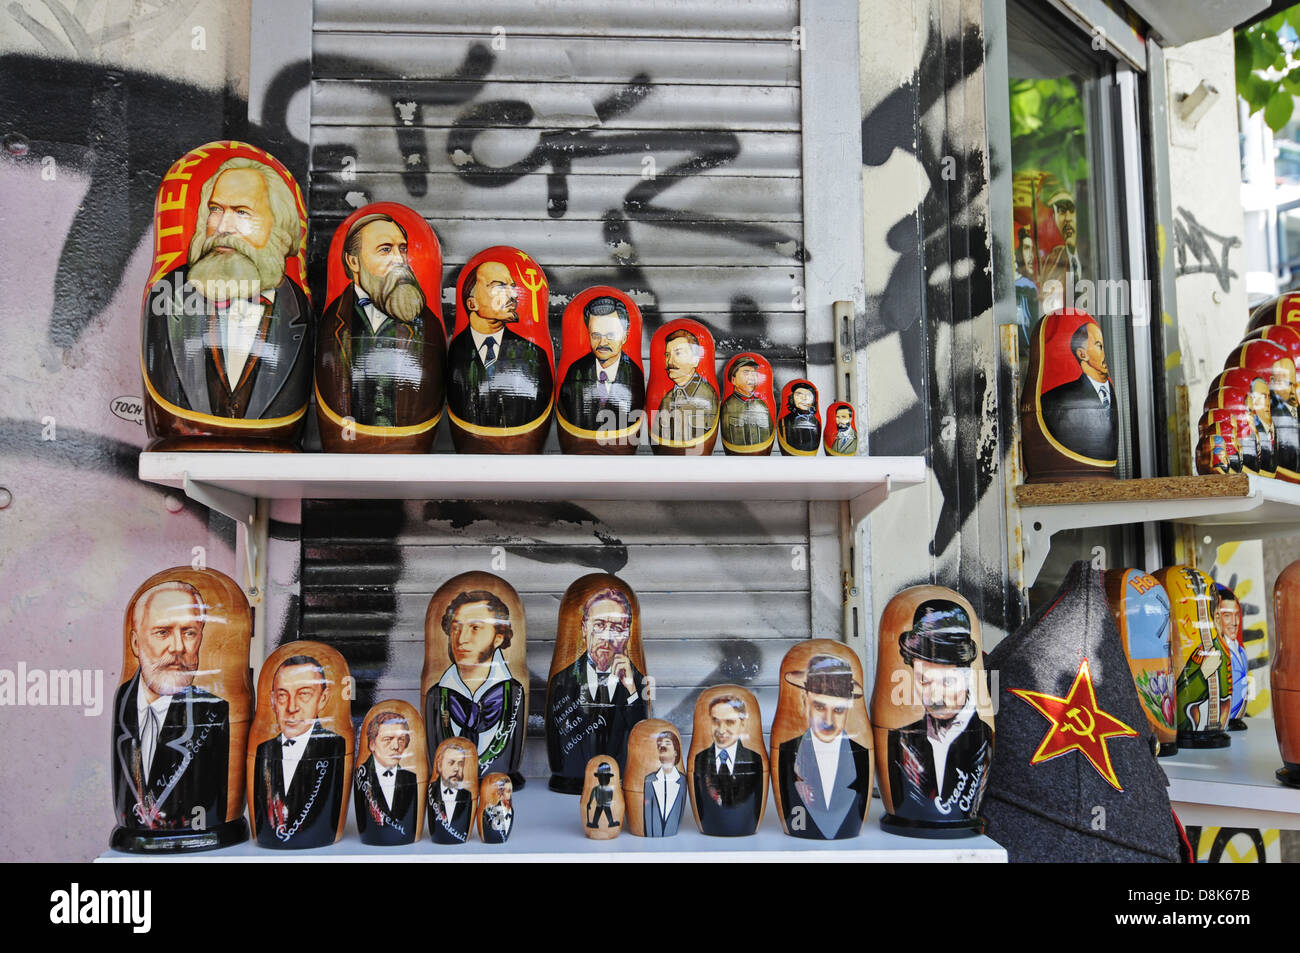 Russian dolls Stock Photo